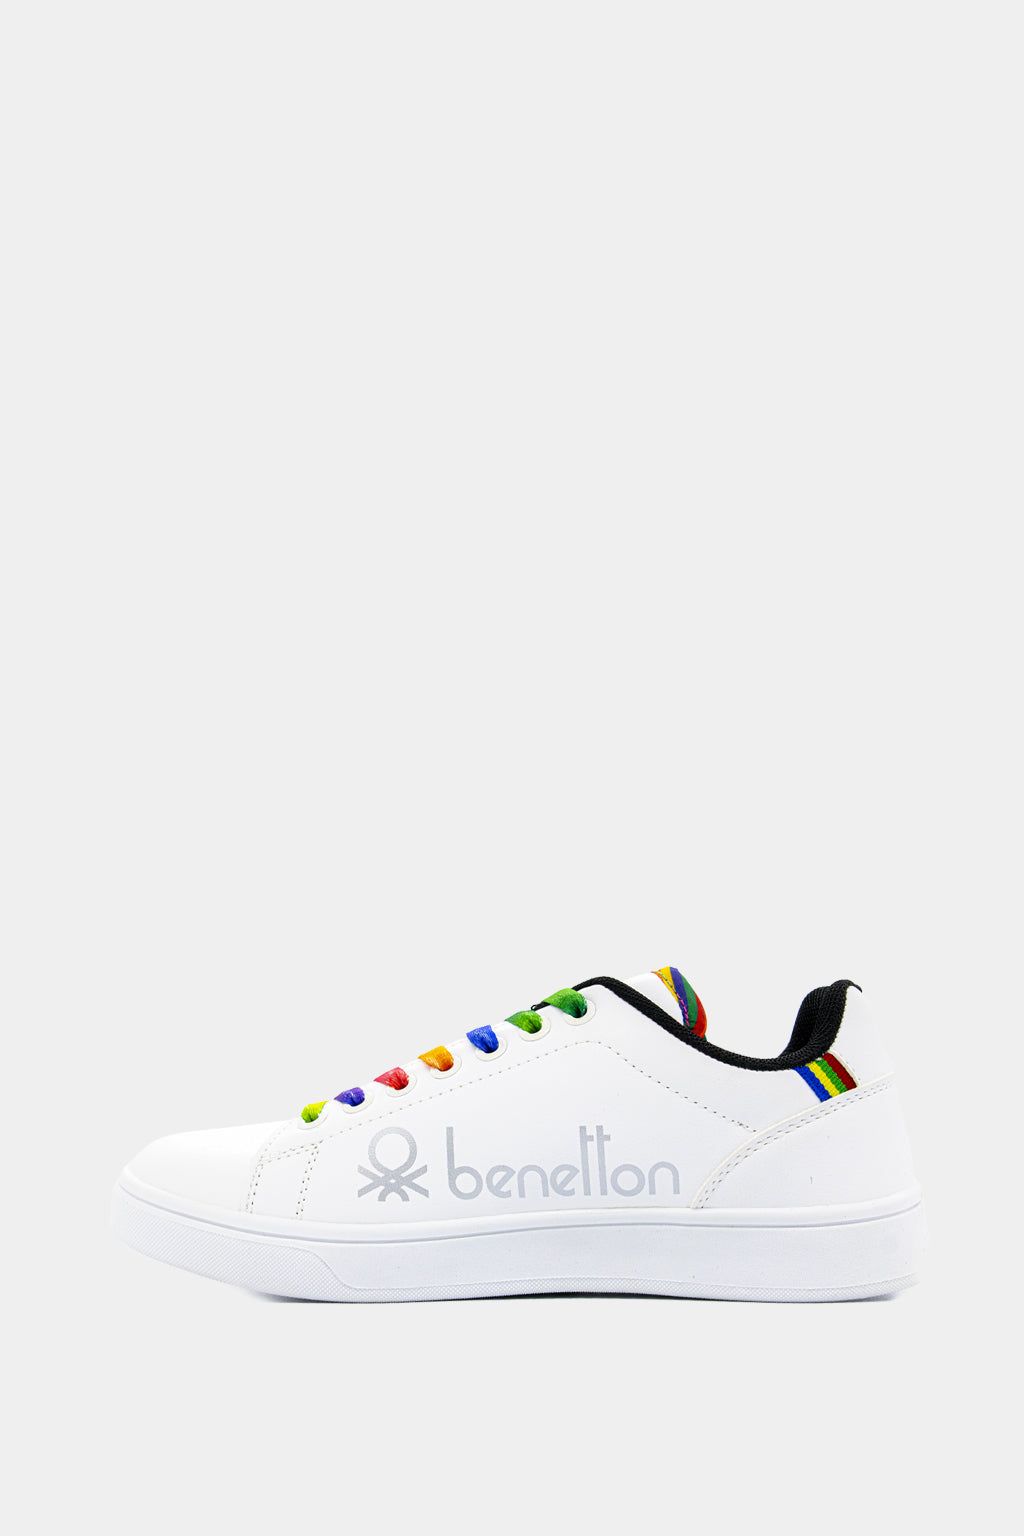 United Colors of Benetton - Penn Date